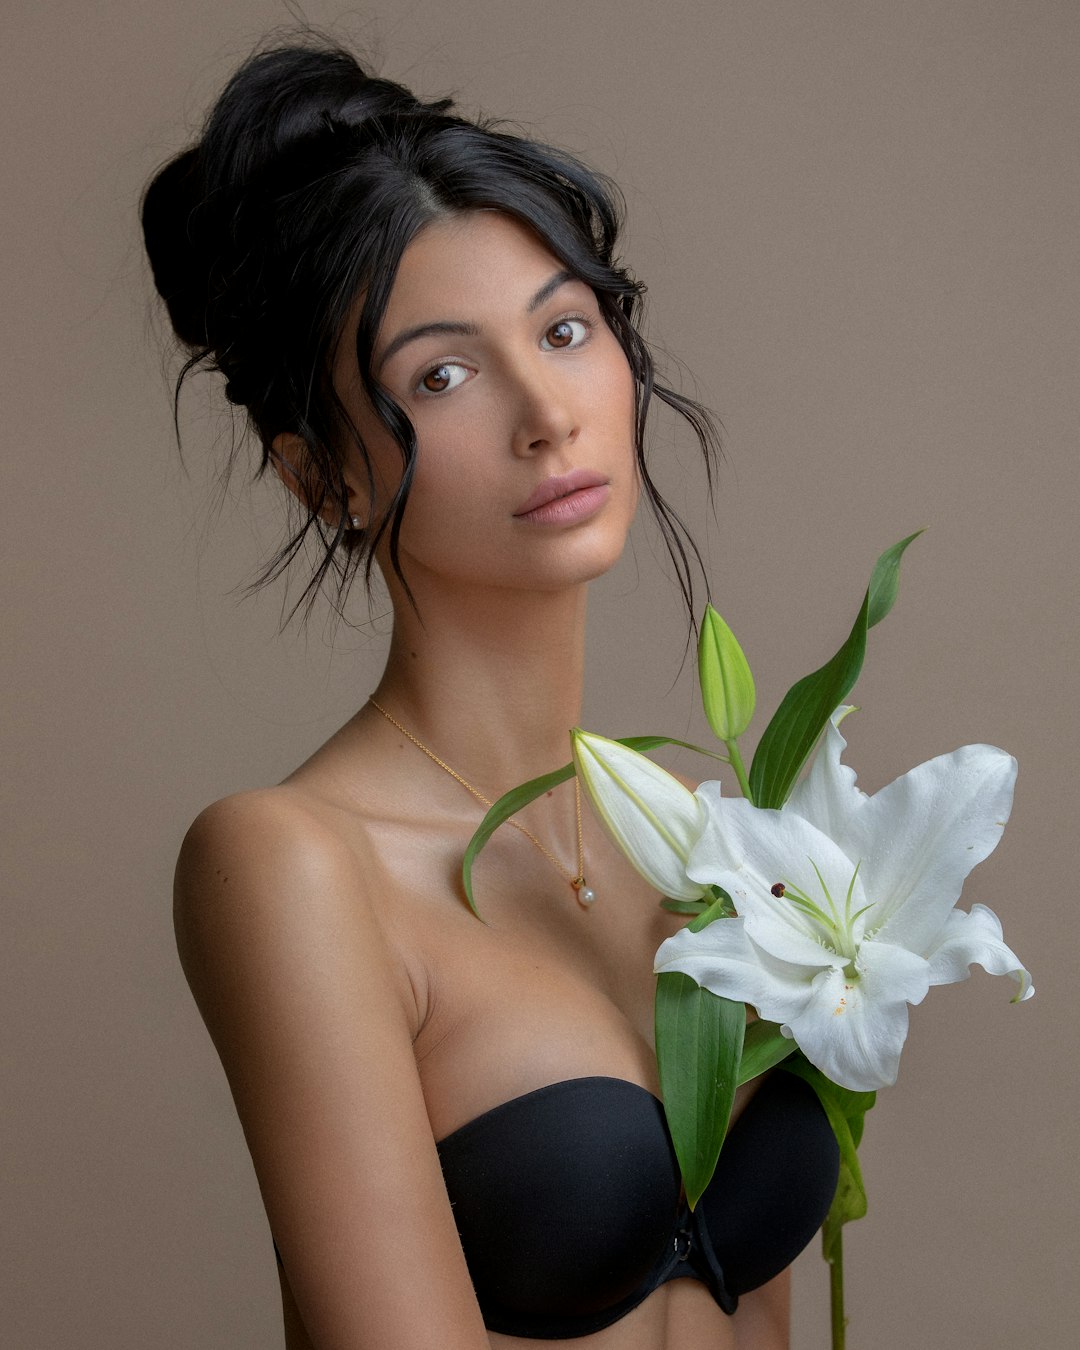 woman in black brassiere holding white flower